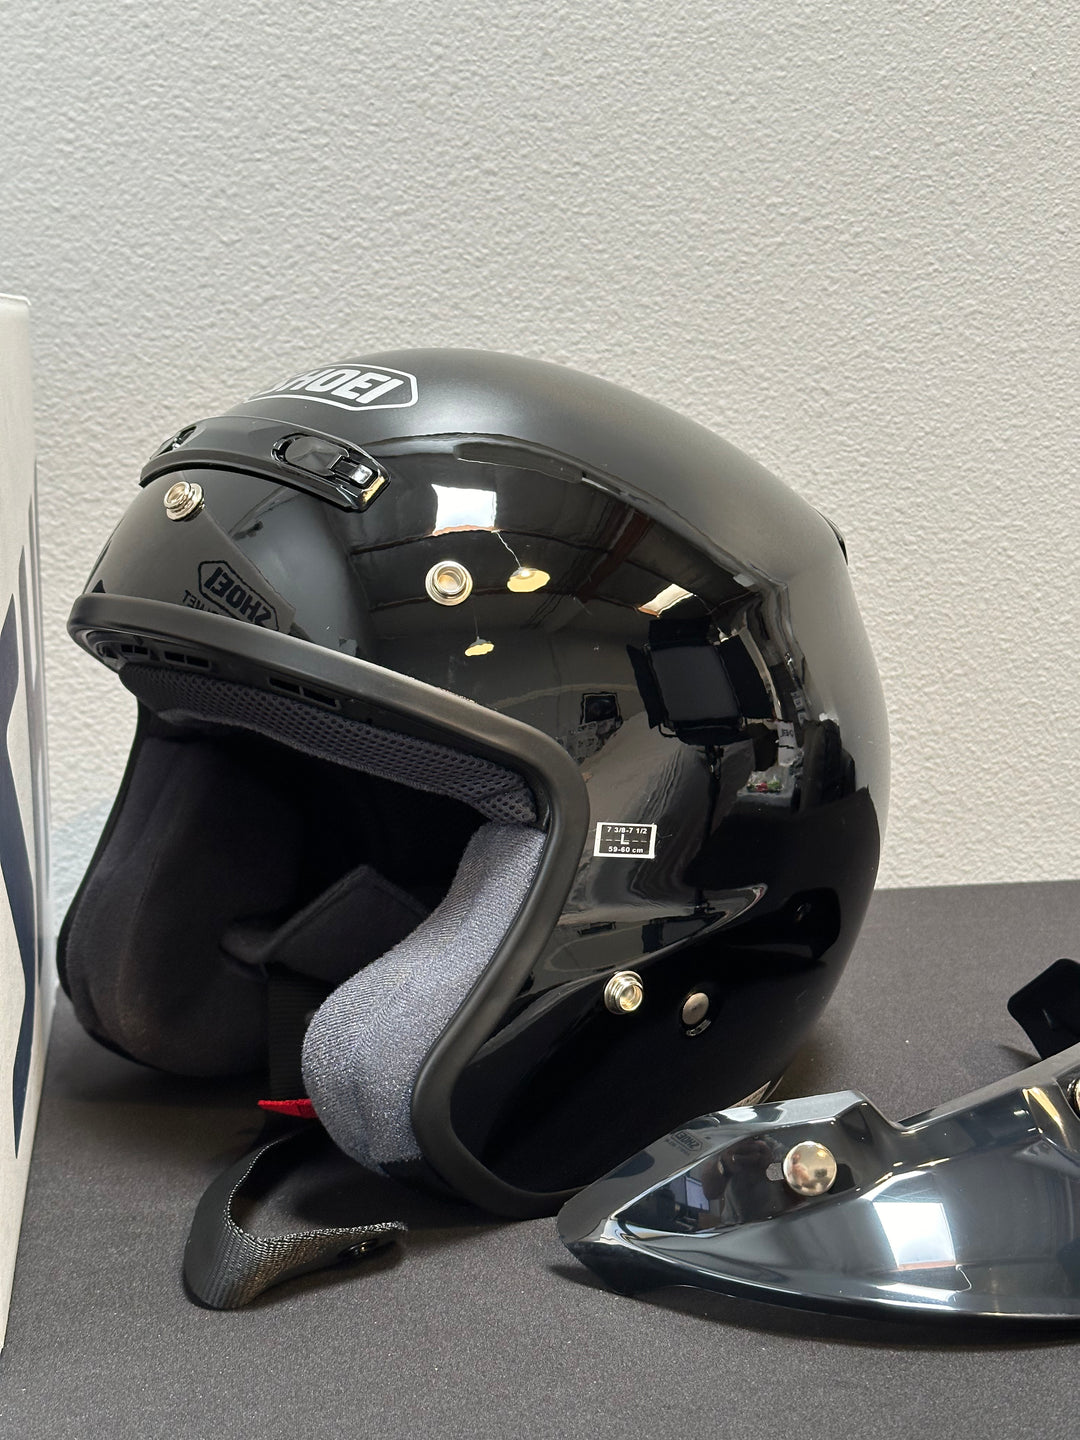 Shoei RJ Platinum-R Open-Face Helmet - Black Size Large OPEN BOX - Motor Psycho Sport